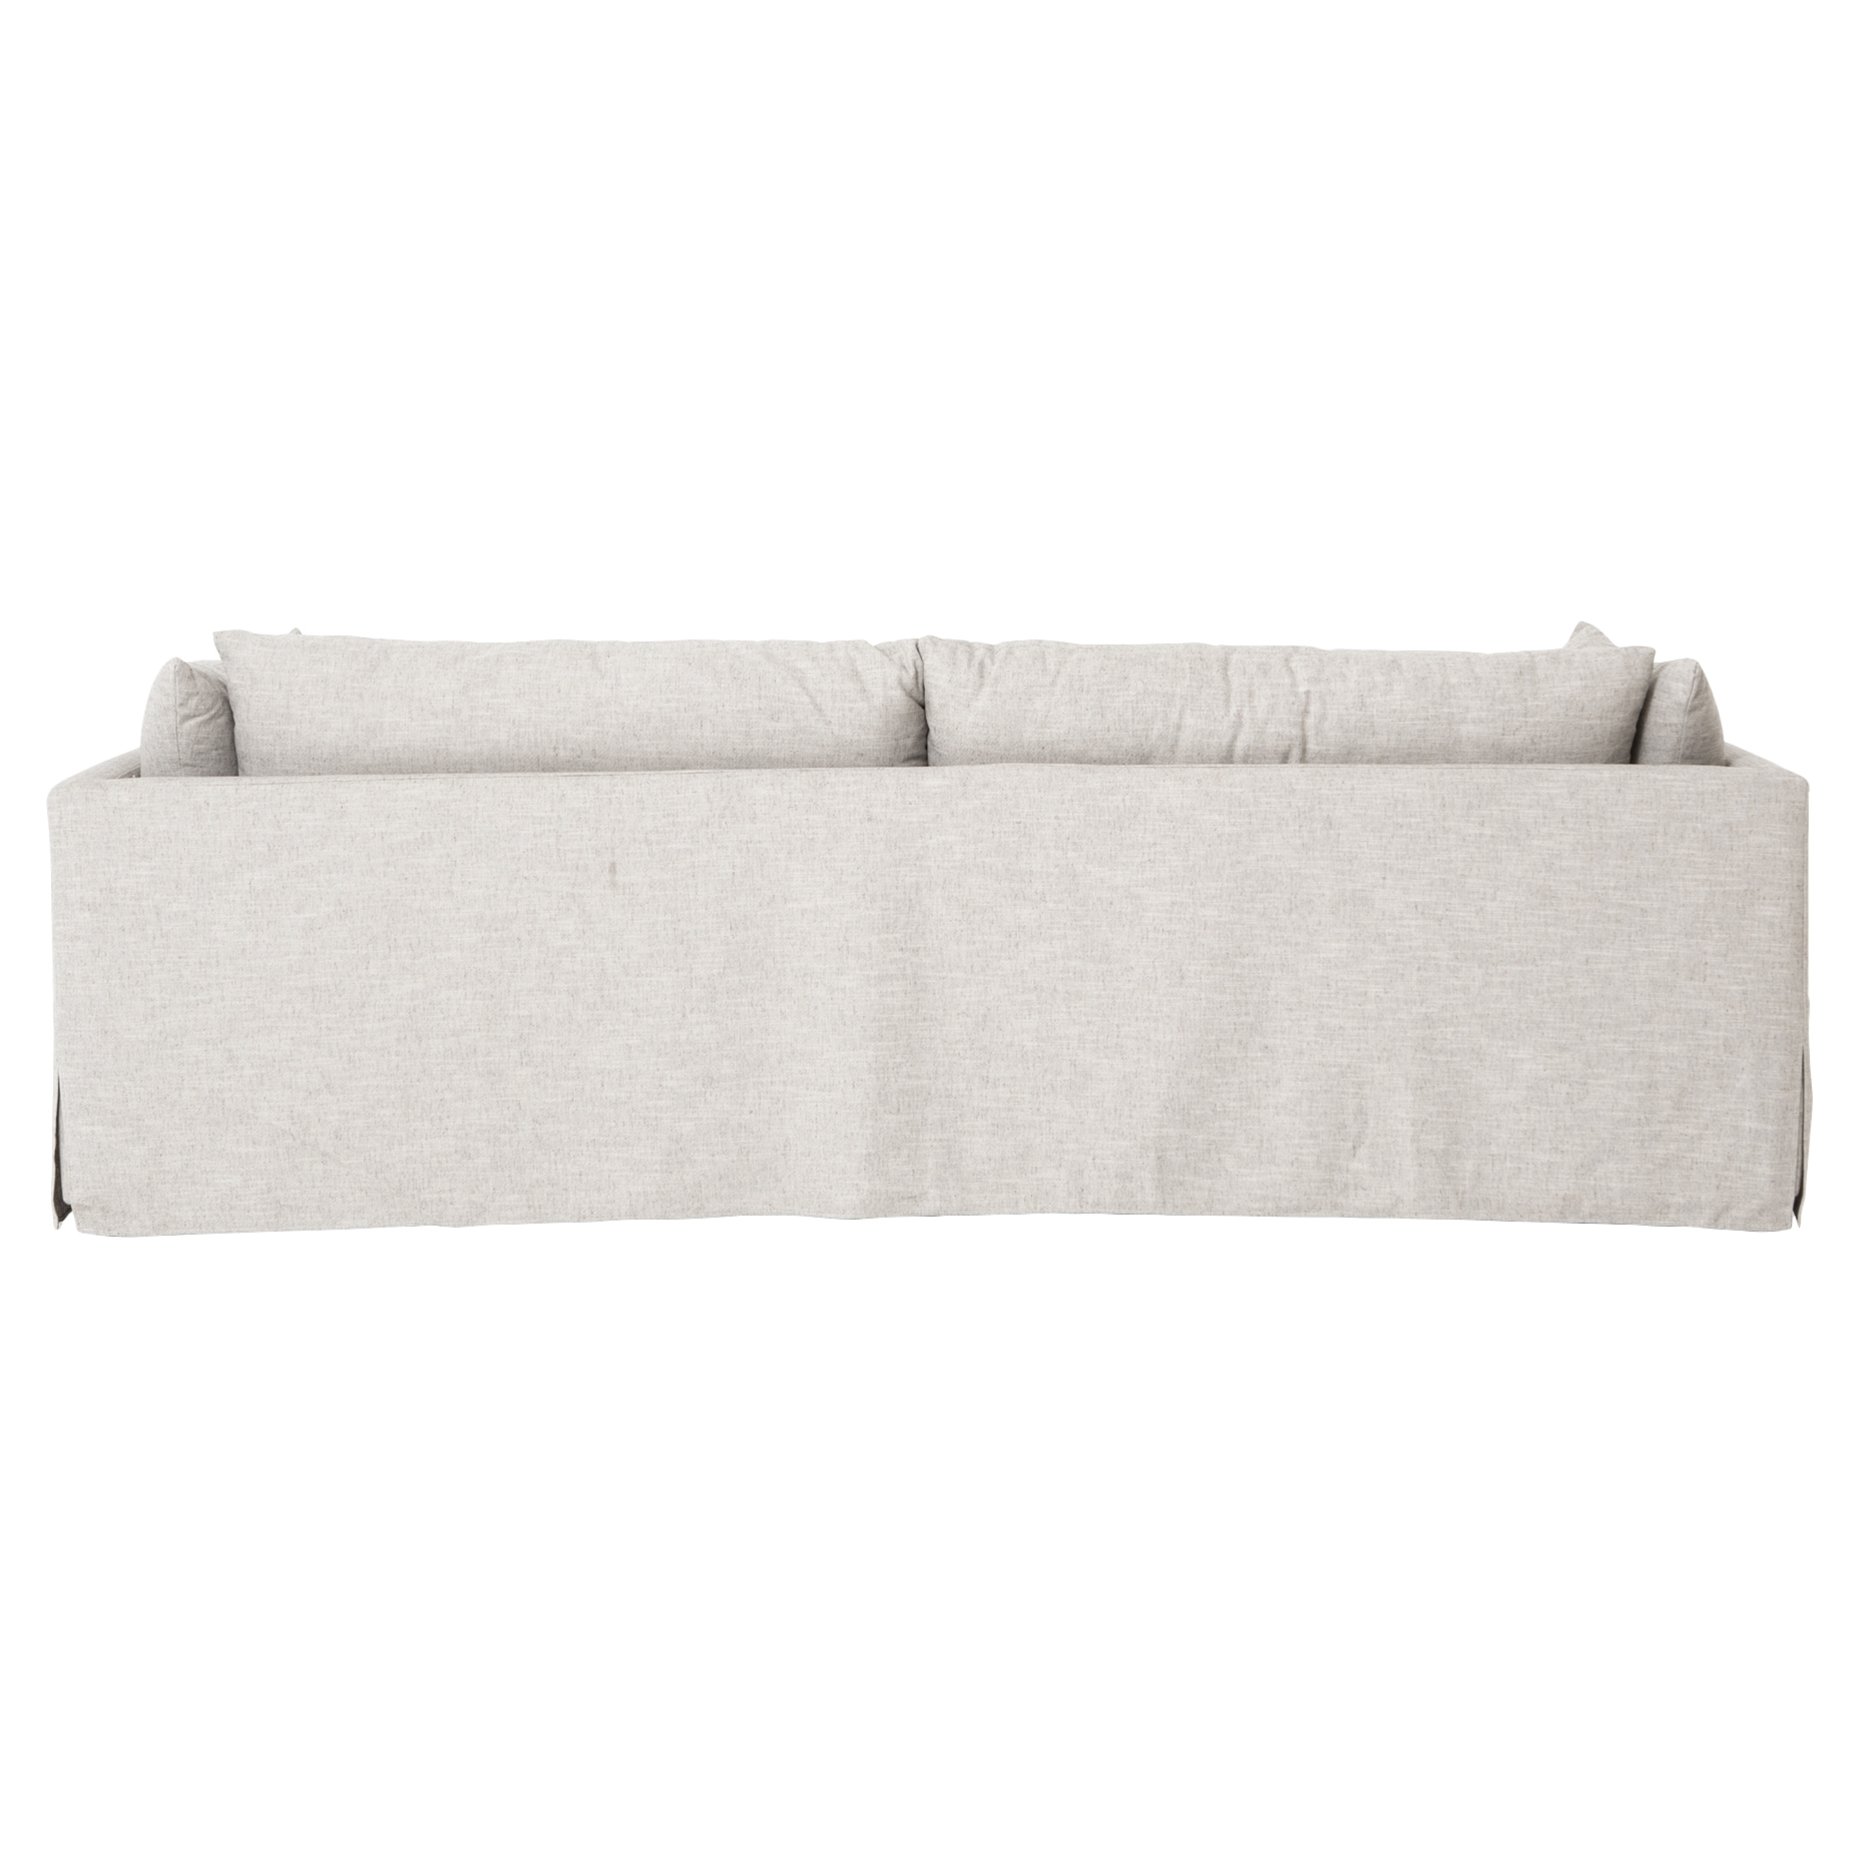 Alexa Modern Classic Light Grey Upholstered Sofa - 90" - Image 3